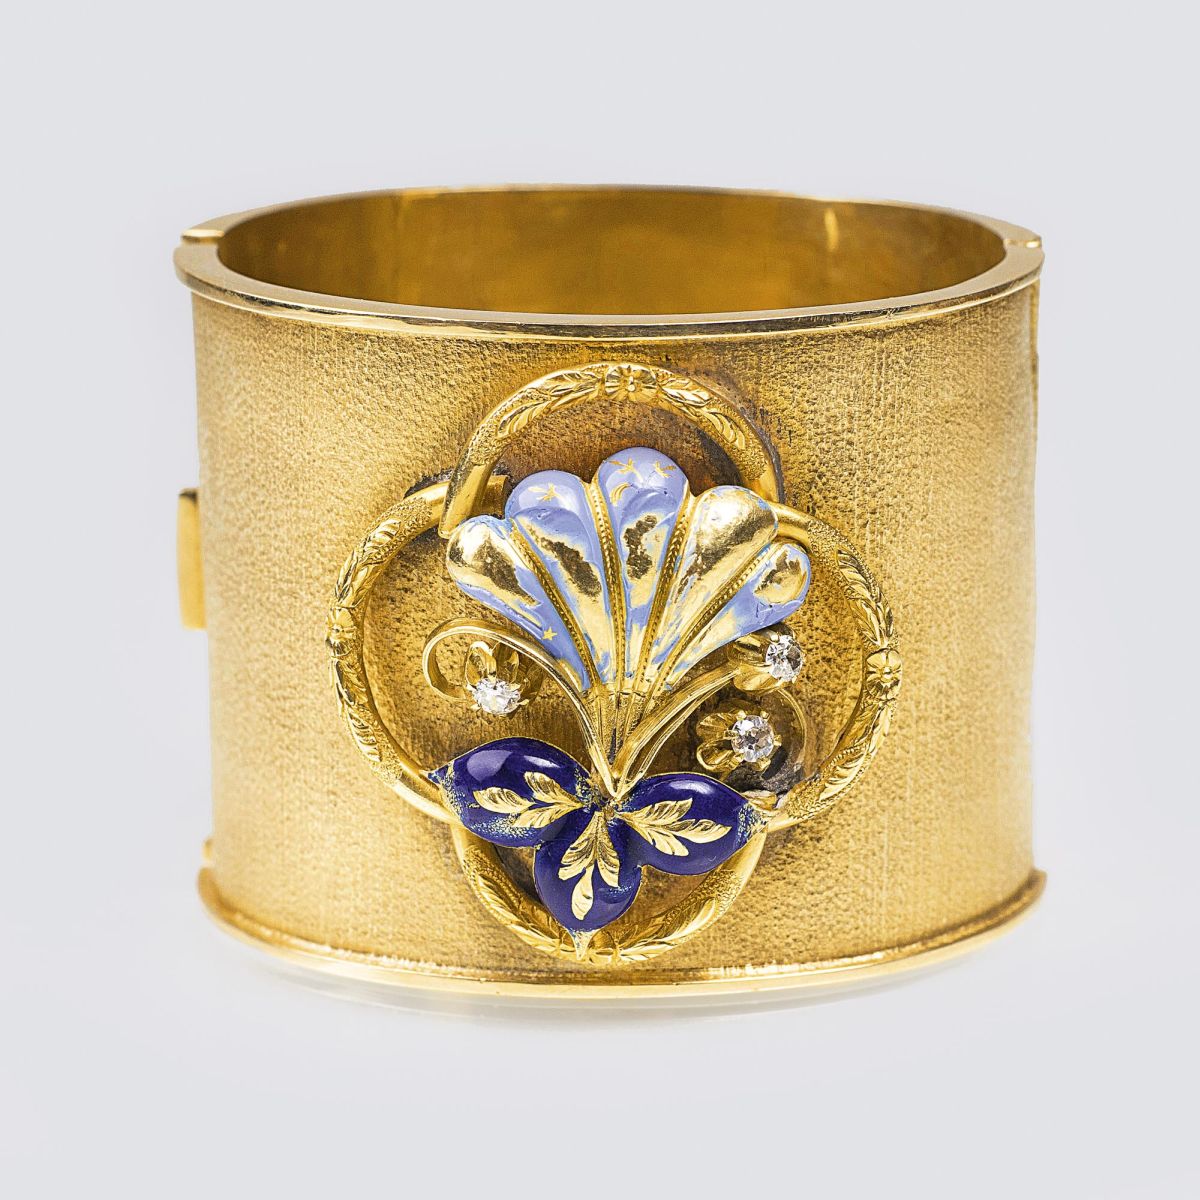 An antique Gold Bangle Bracelet with Diamonds